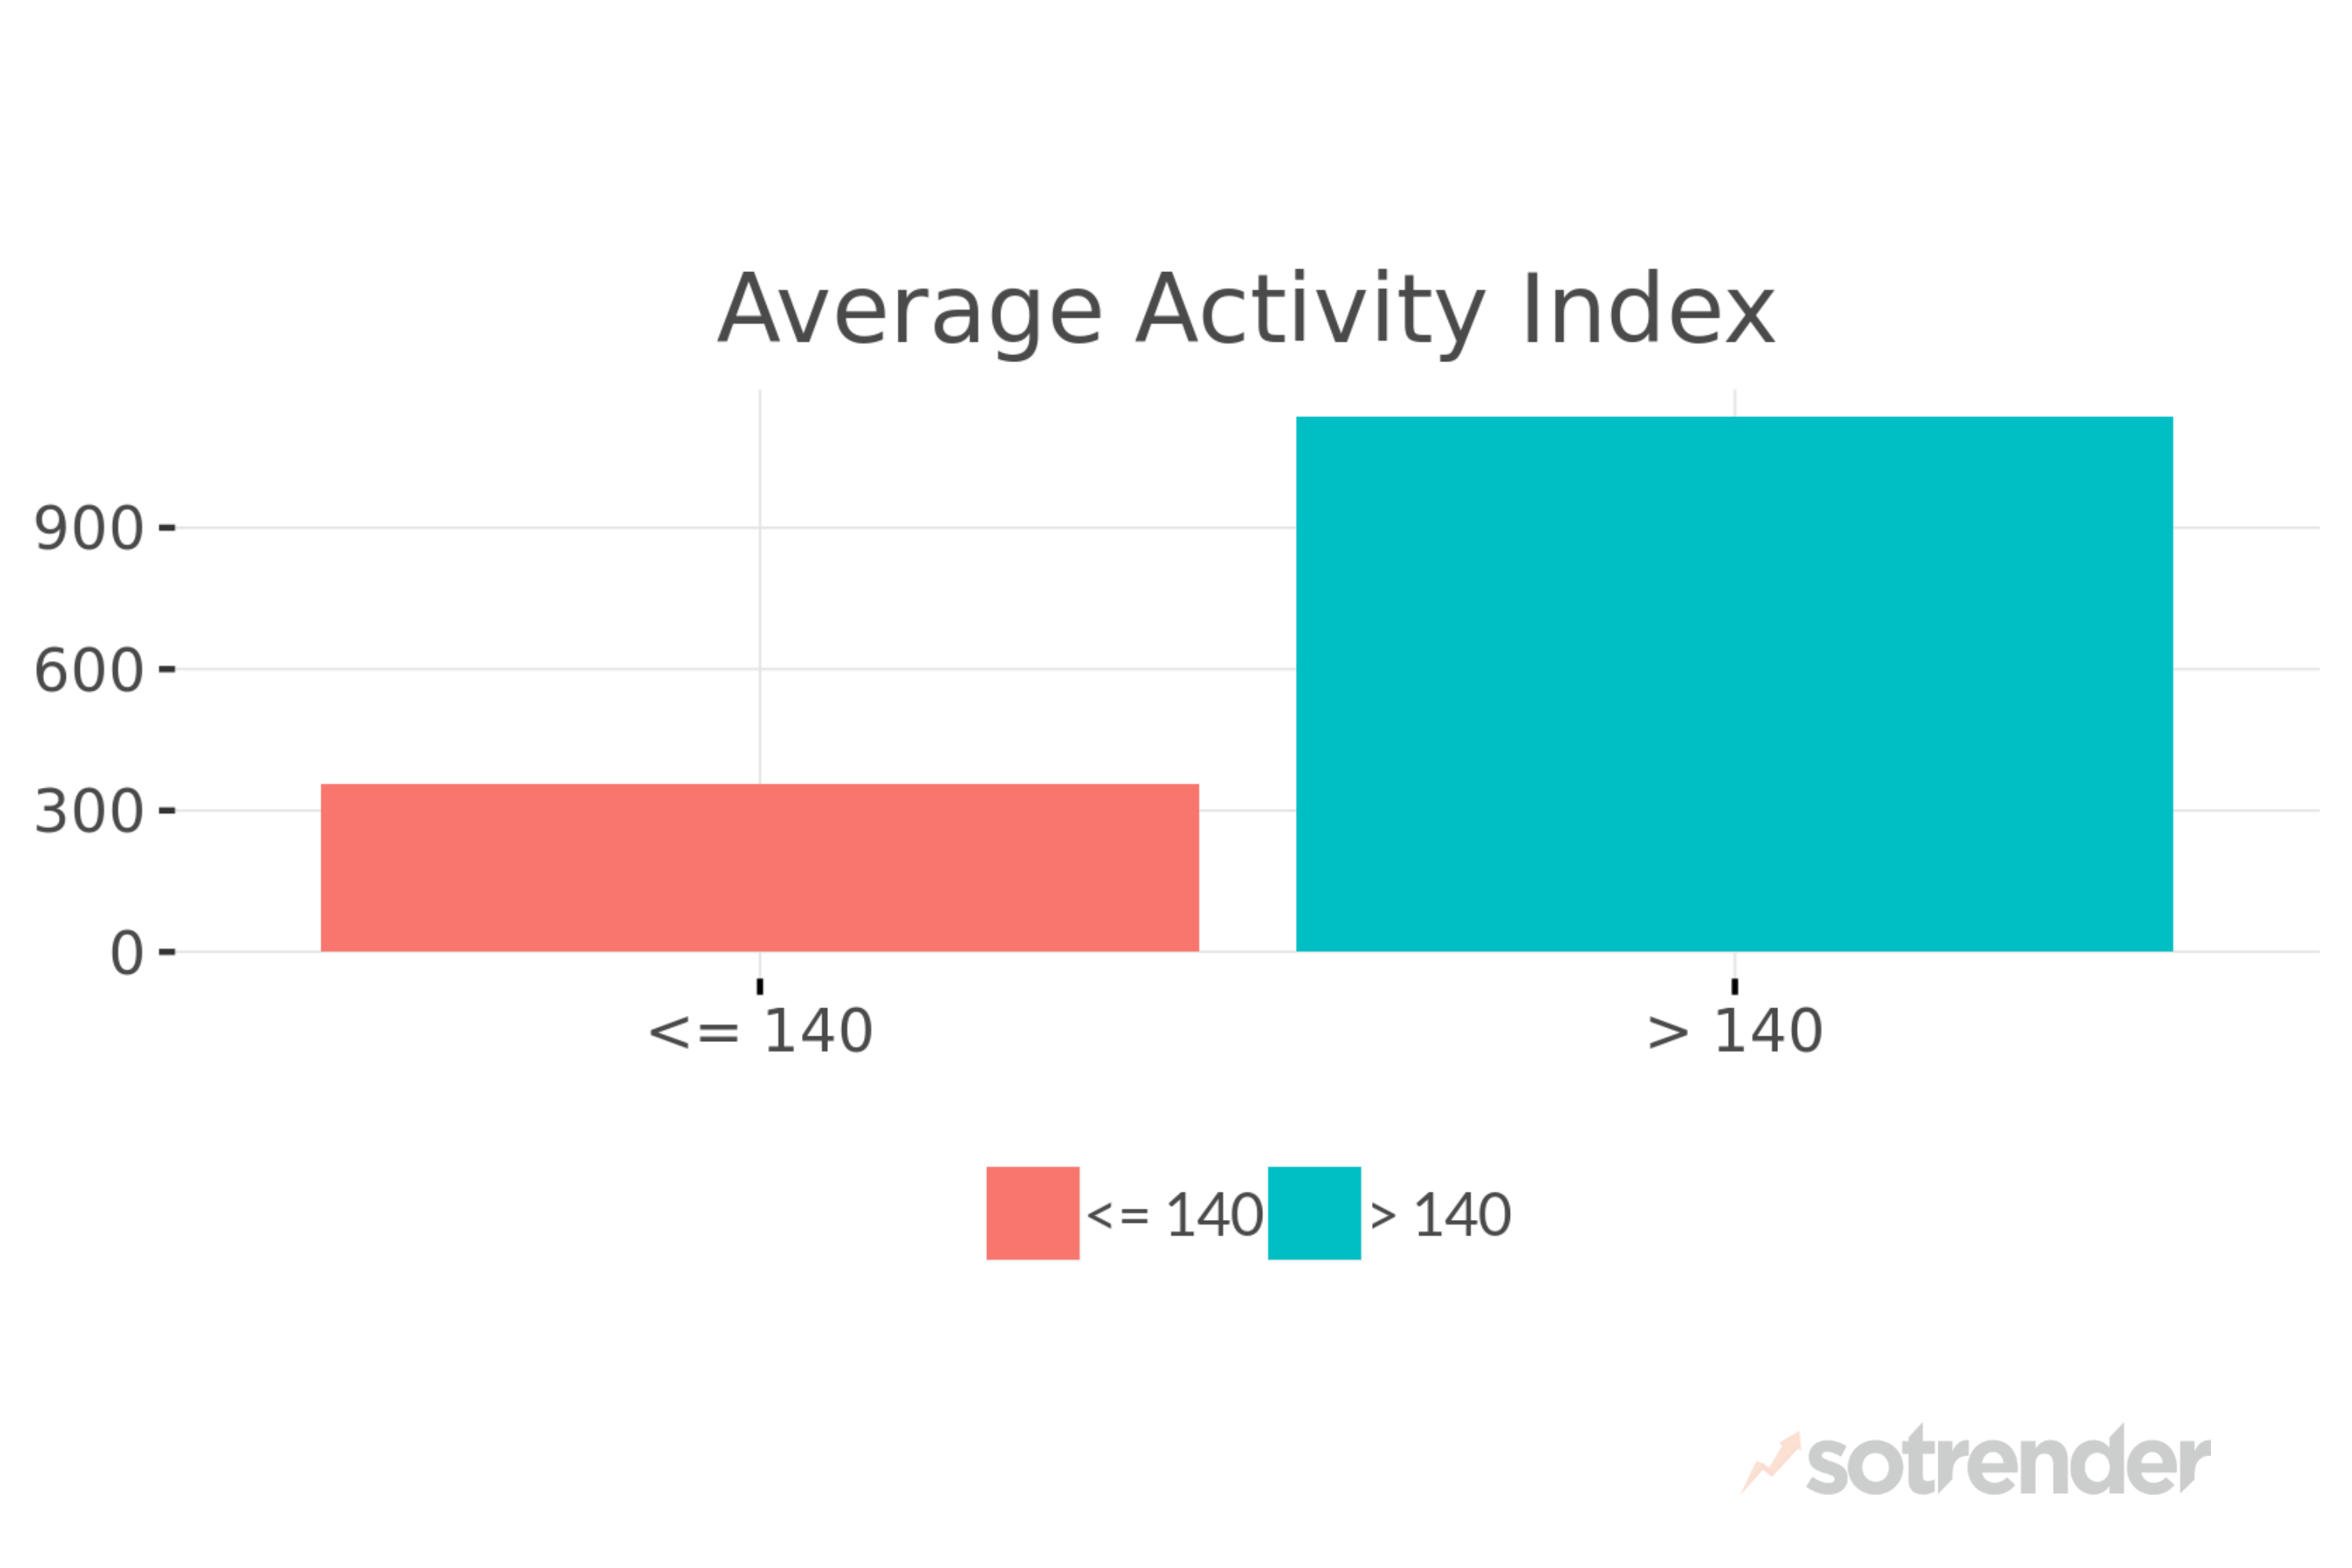 Average Activity Index on Twitter